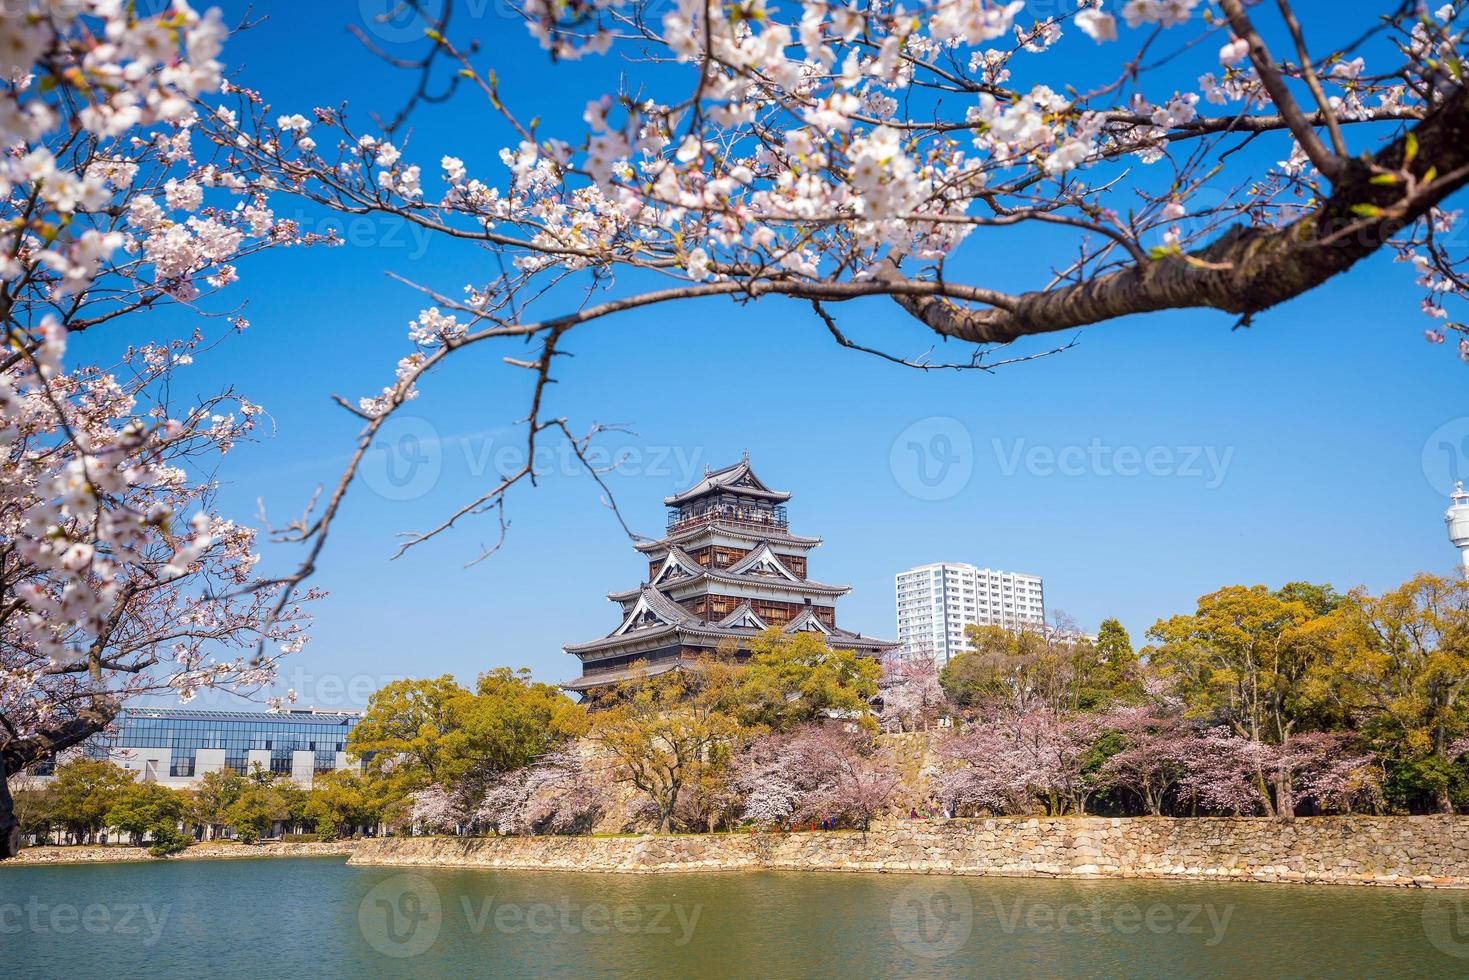 Hiroshima Castle During Cherry Blossom Season photo